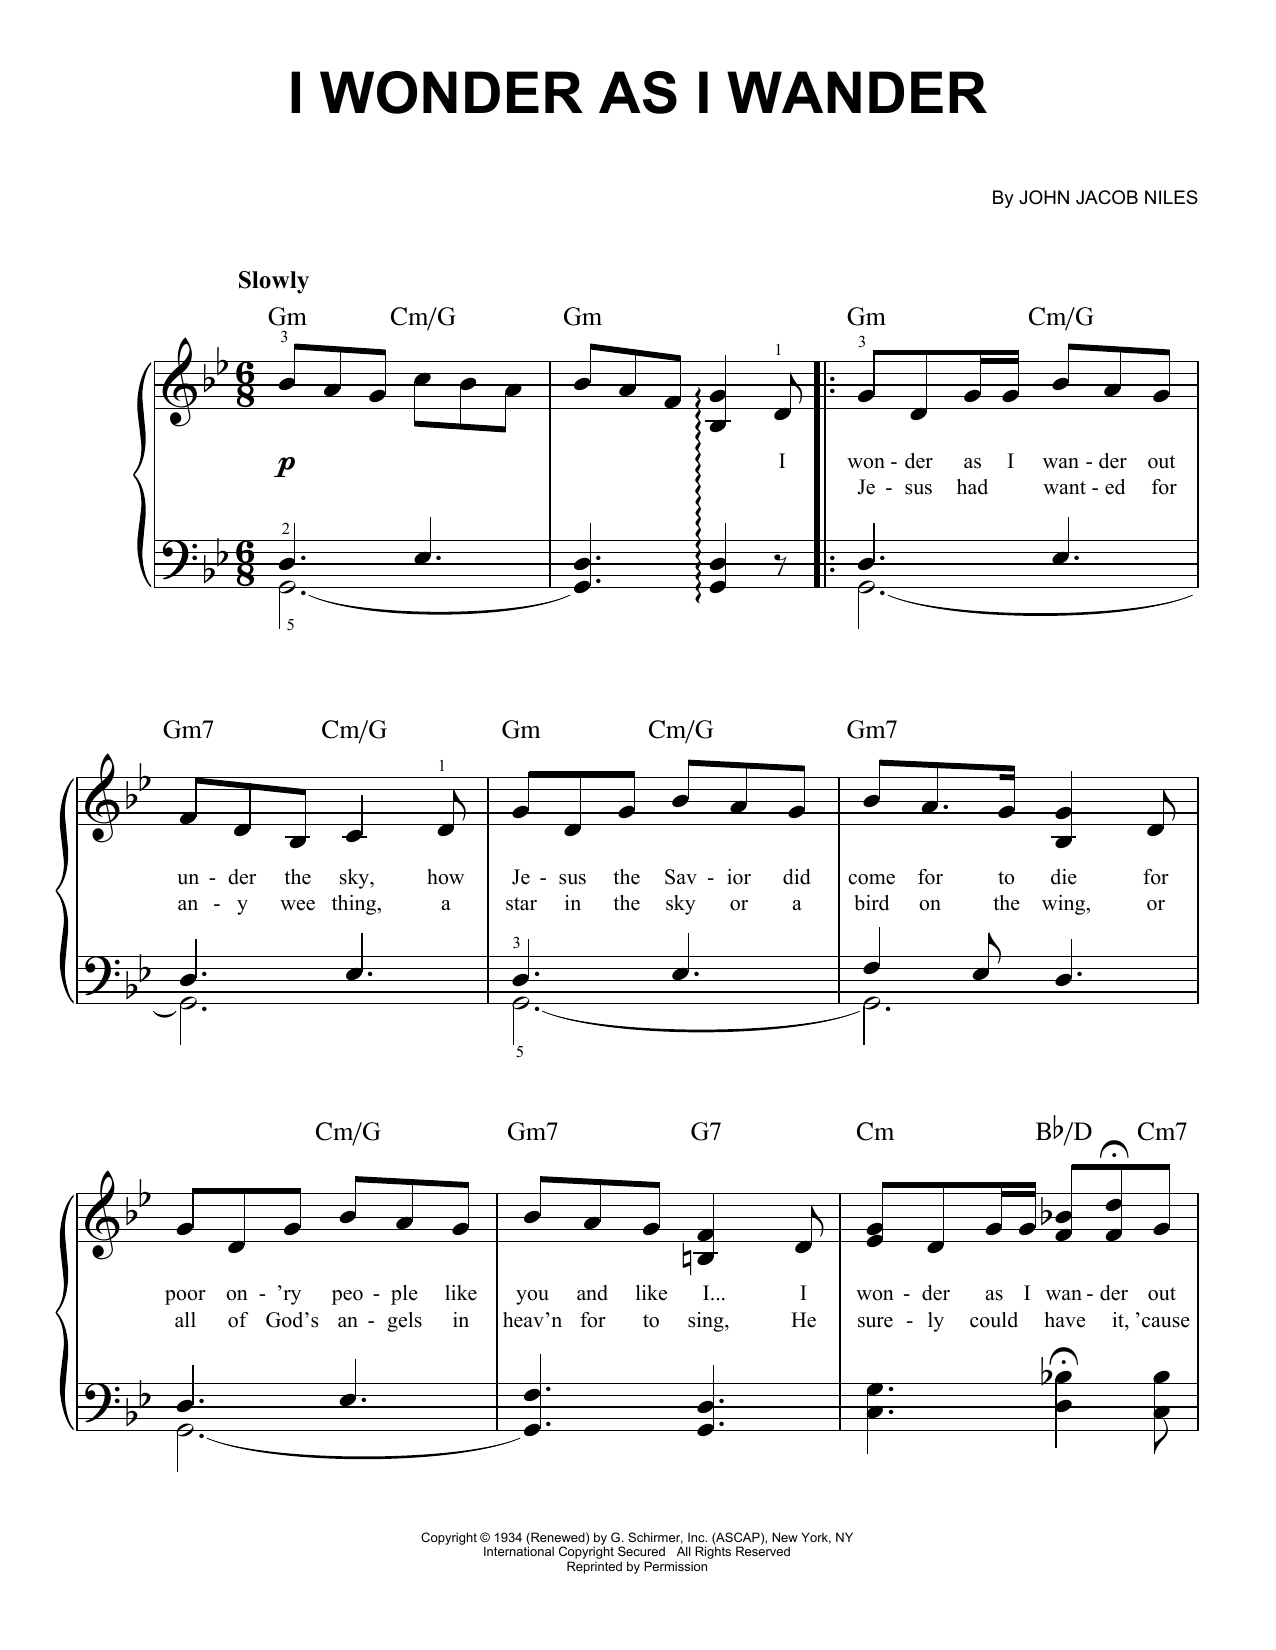 John Jacob Niles I Wonder As I Wander Sheet Music Notes & Chords for Piano, Vocal & Guitar (Right-Hand Melody) - Download or Print PDF